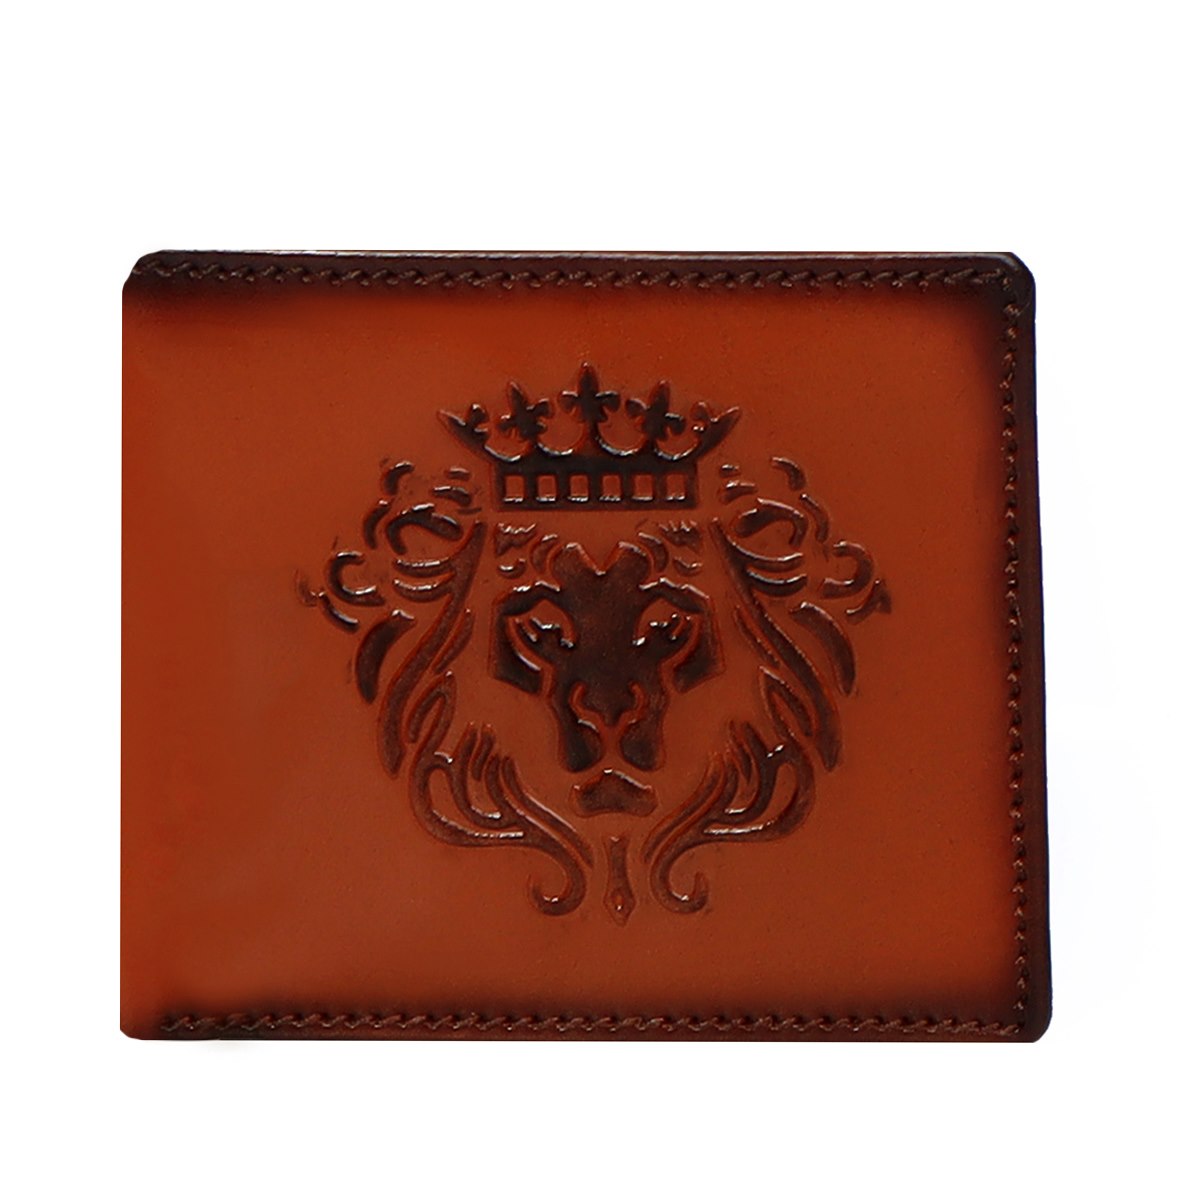 Men's Tan Hand Painted Bi-Fold Genuine Leather Wallet With Embossed Lion Logo By Brune & Bareskin